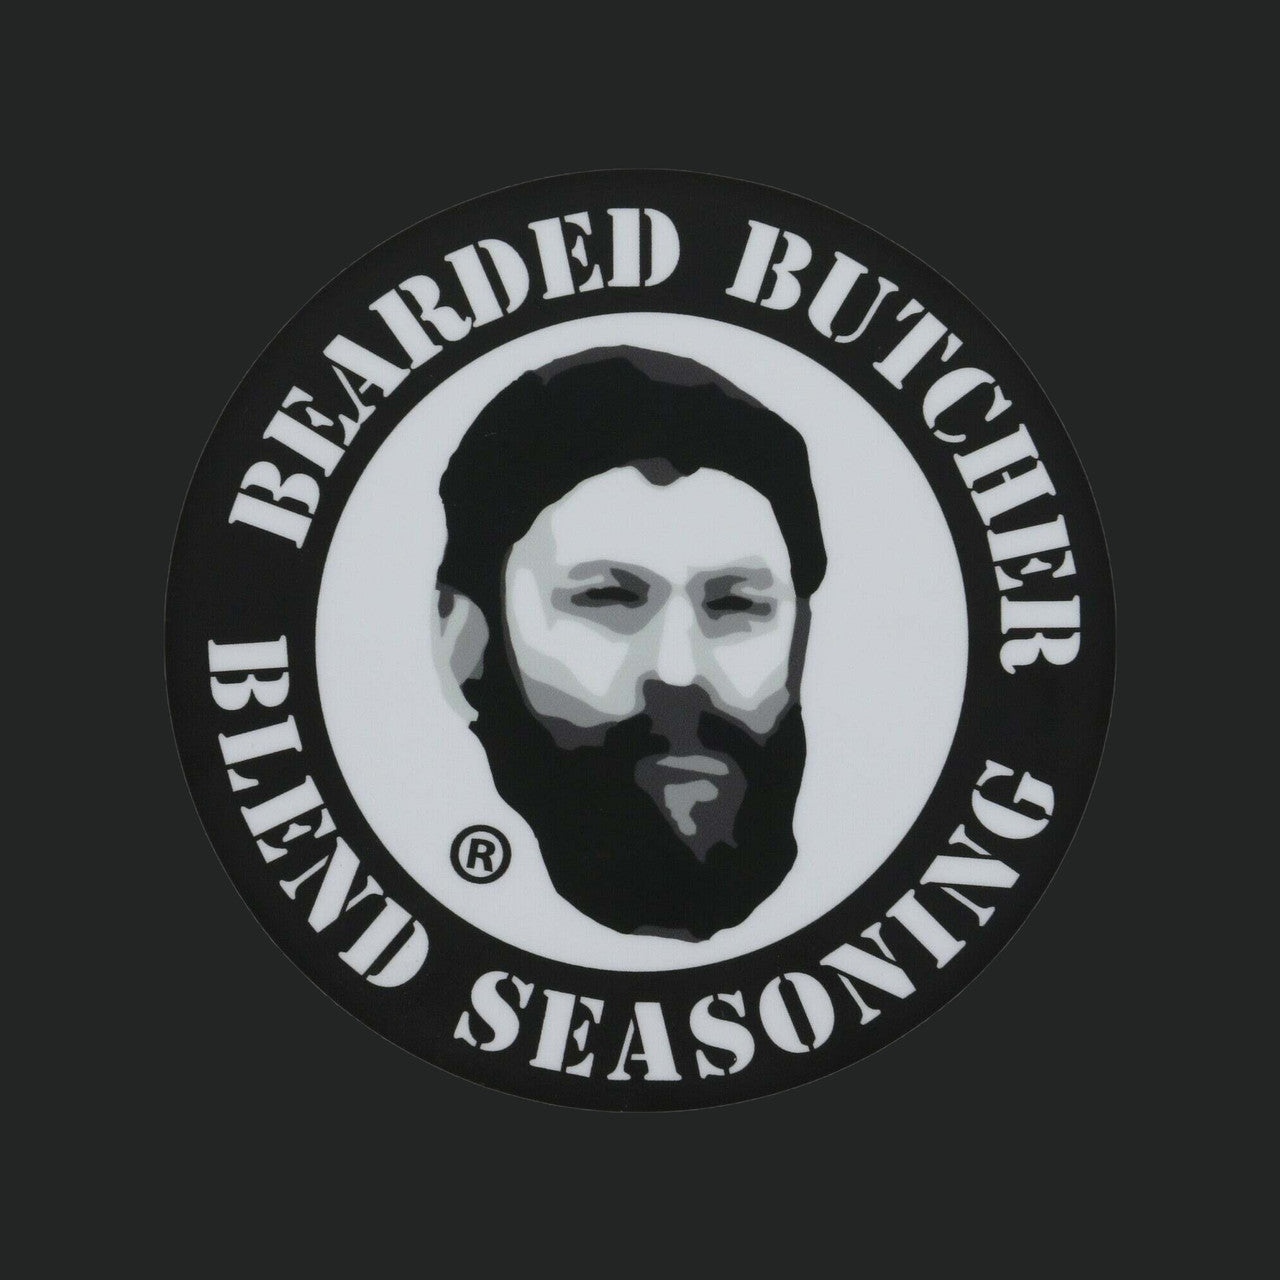 Bearded Butcher Sticker – The Bearded Butchers